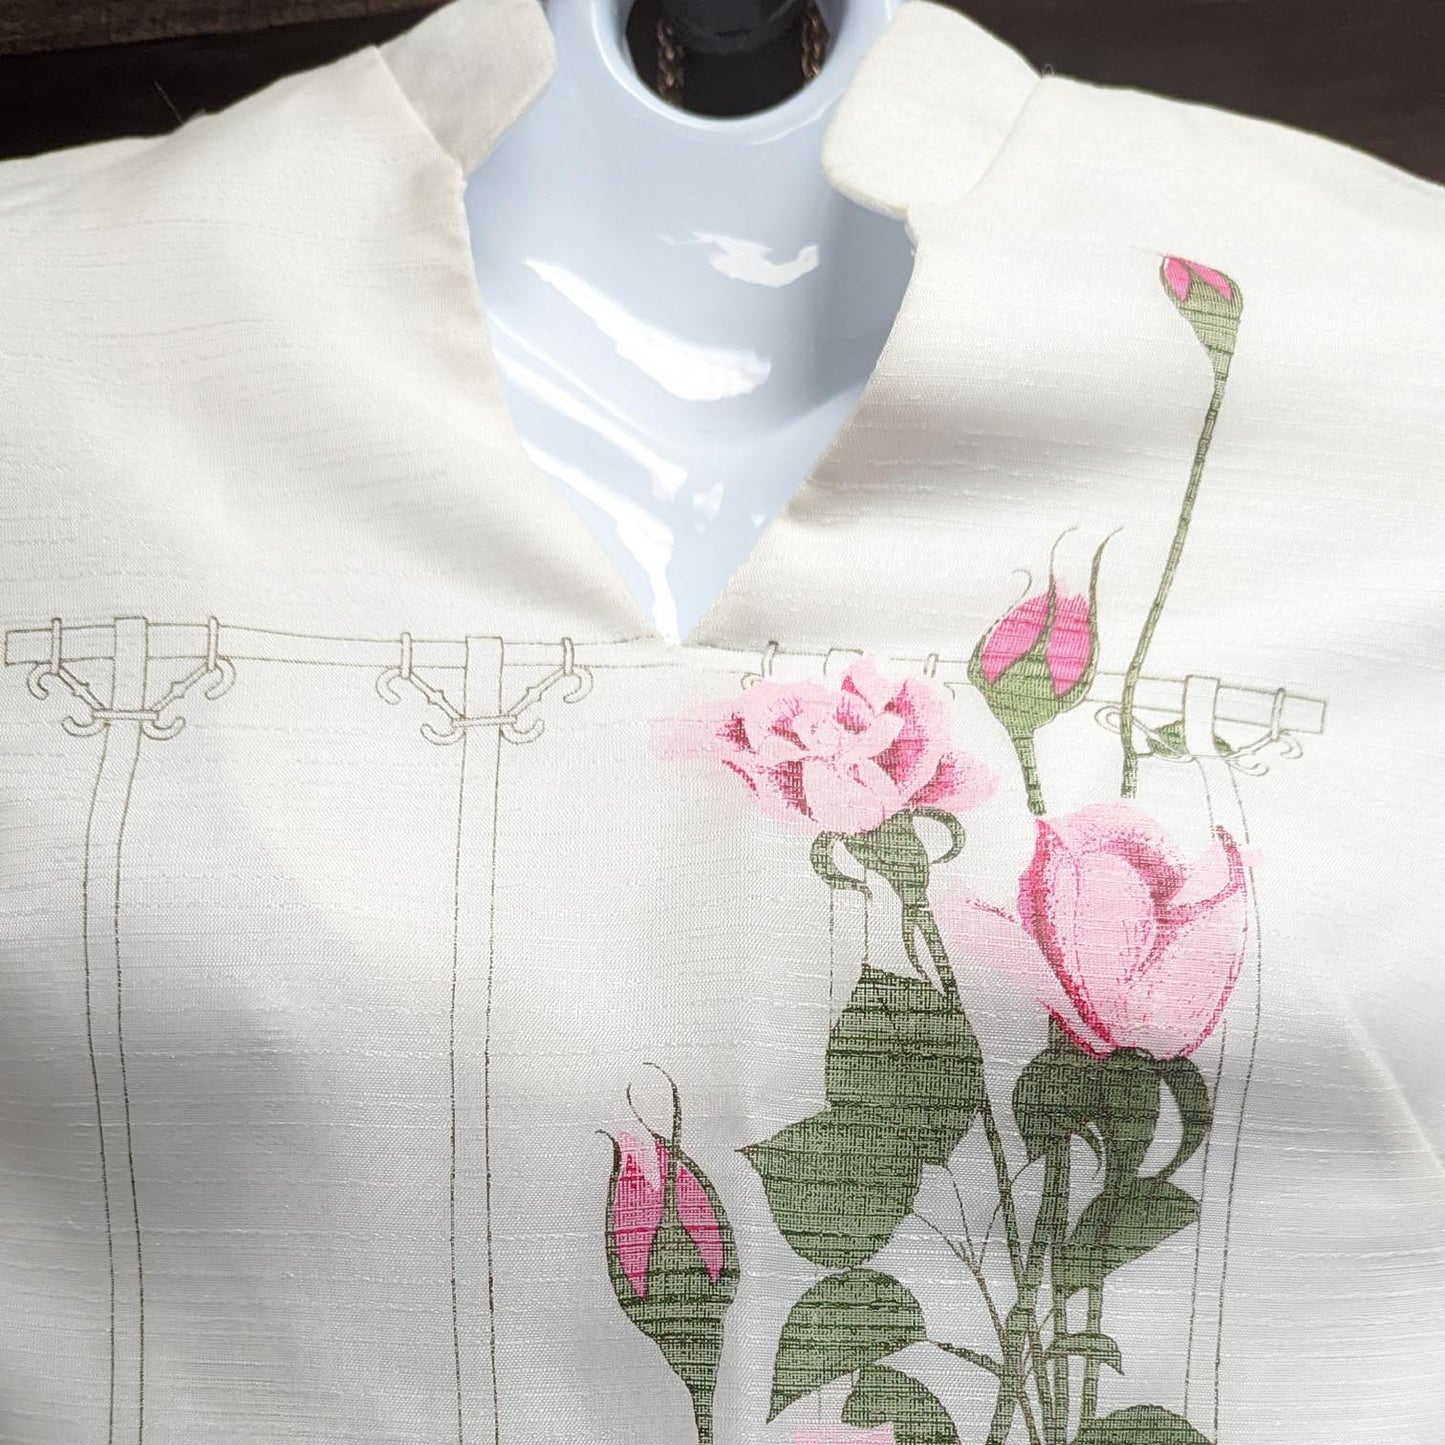 Alfred Shaheen Vintage Women's Floral Maxi Long sleeve Hostess Robe Dress 8